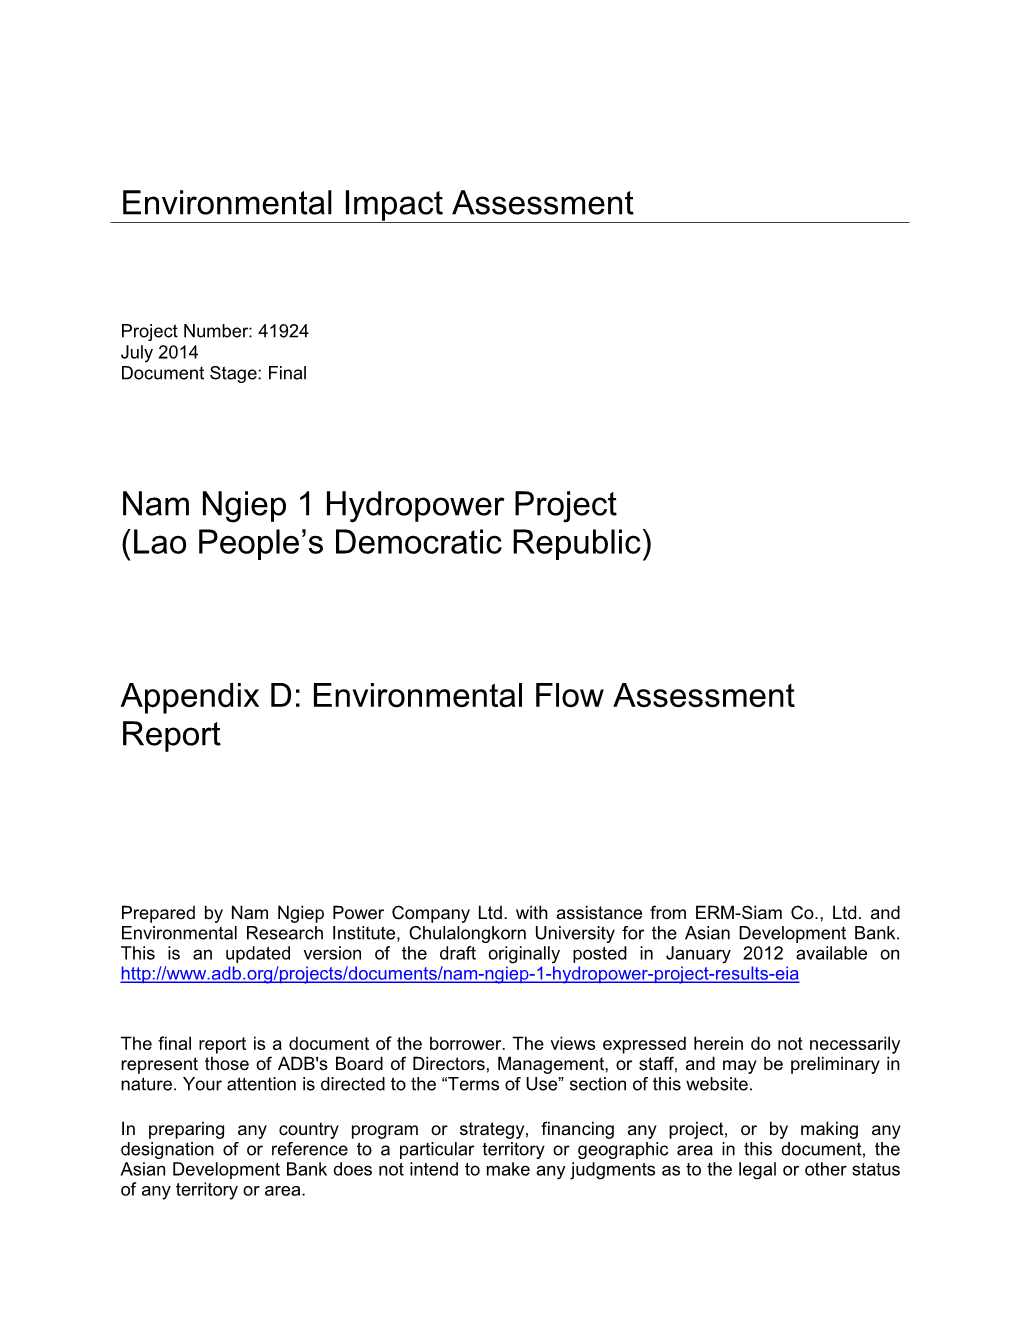 Environmental Flow Assessment Report